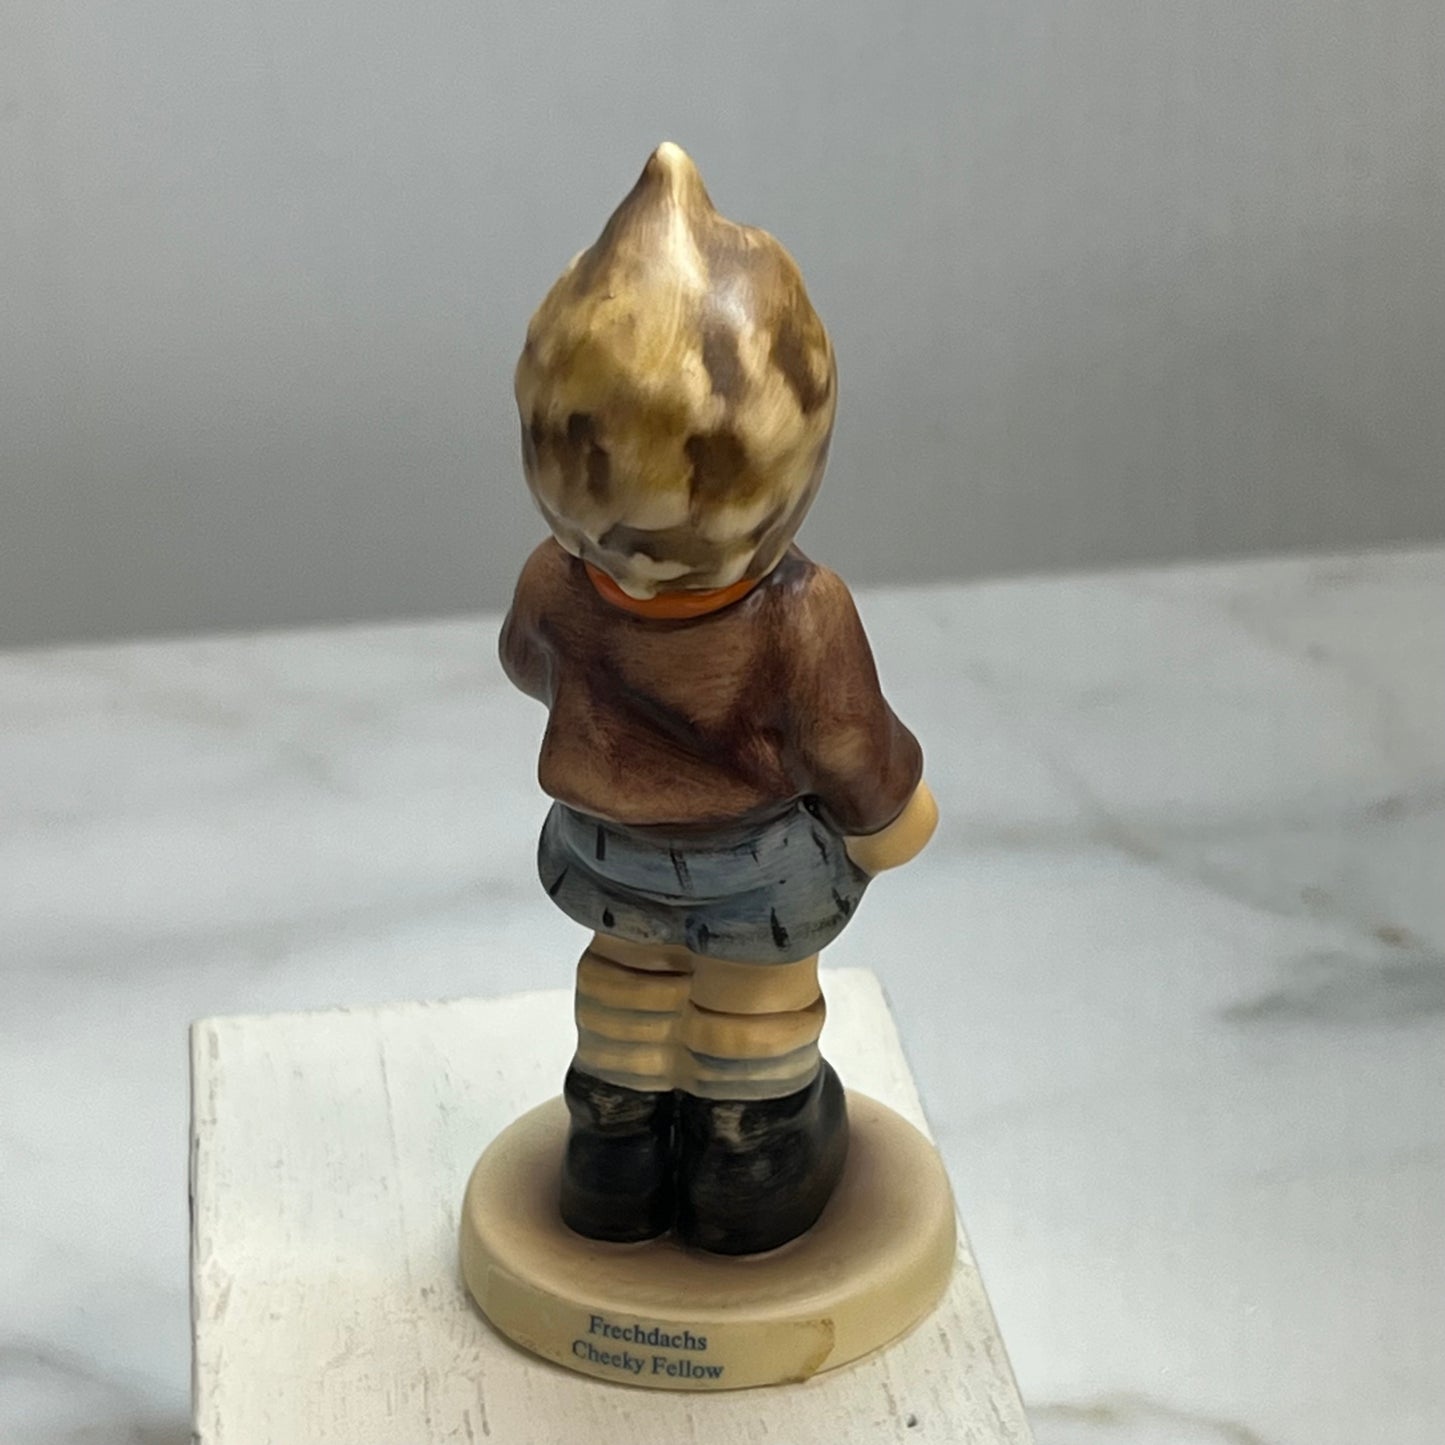 1992 Hummel "Cheeky Fellow" HUM 554 M. I. Hummel Club Figurine